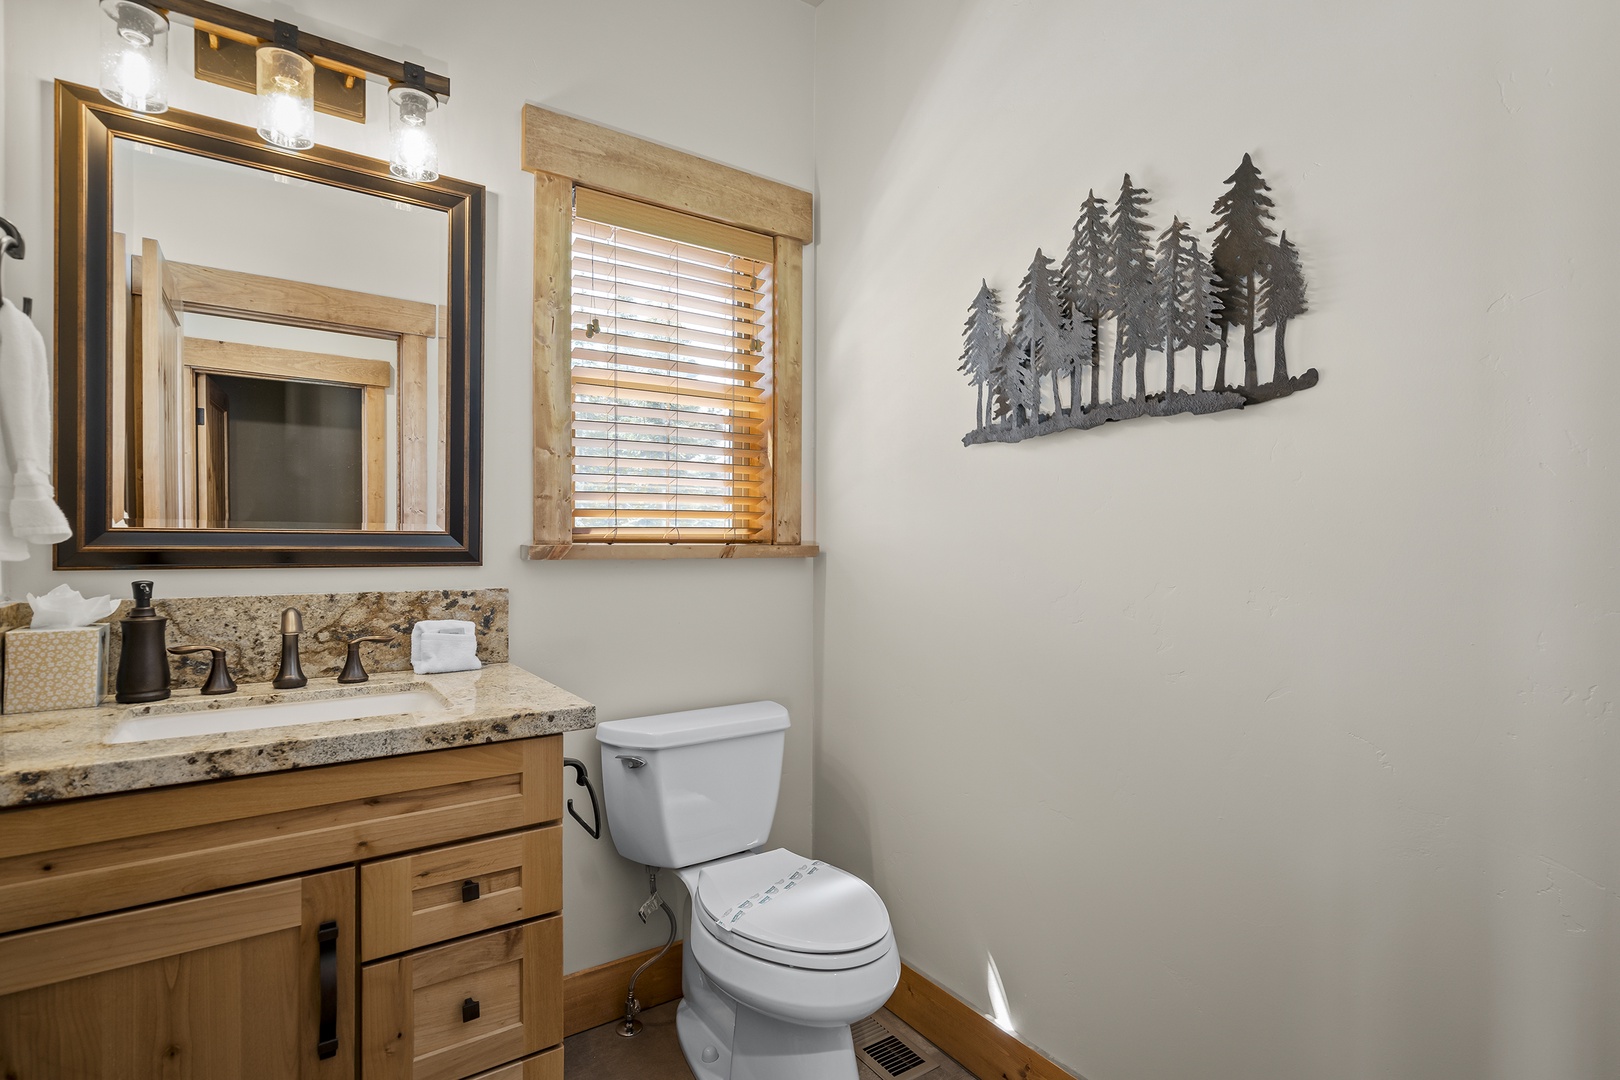 Upstairs shared bathroom:  Mountain View Lodge